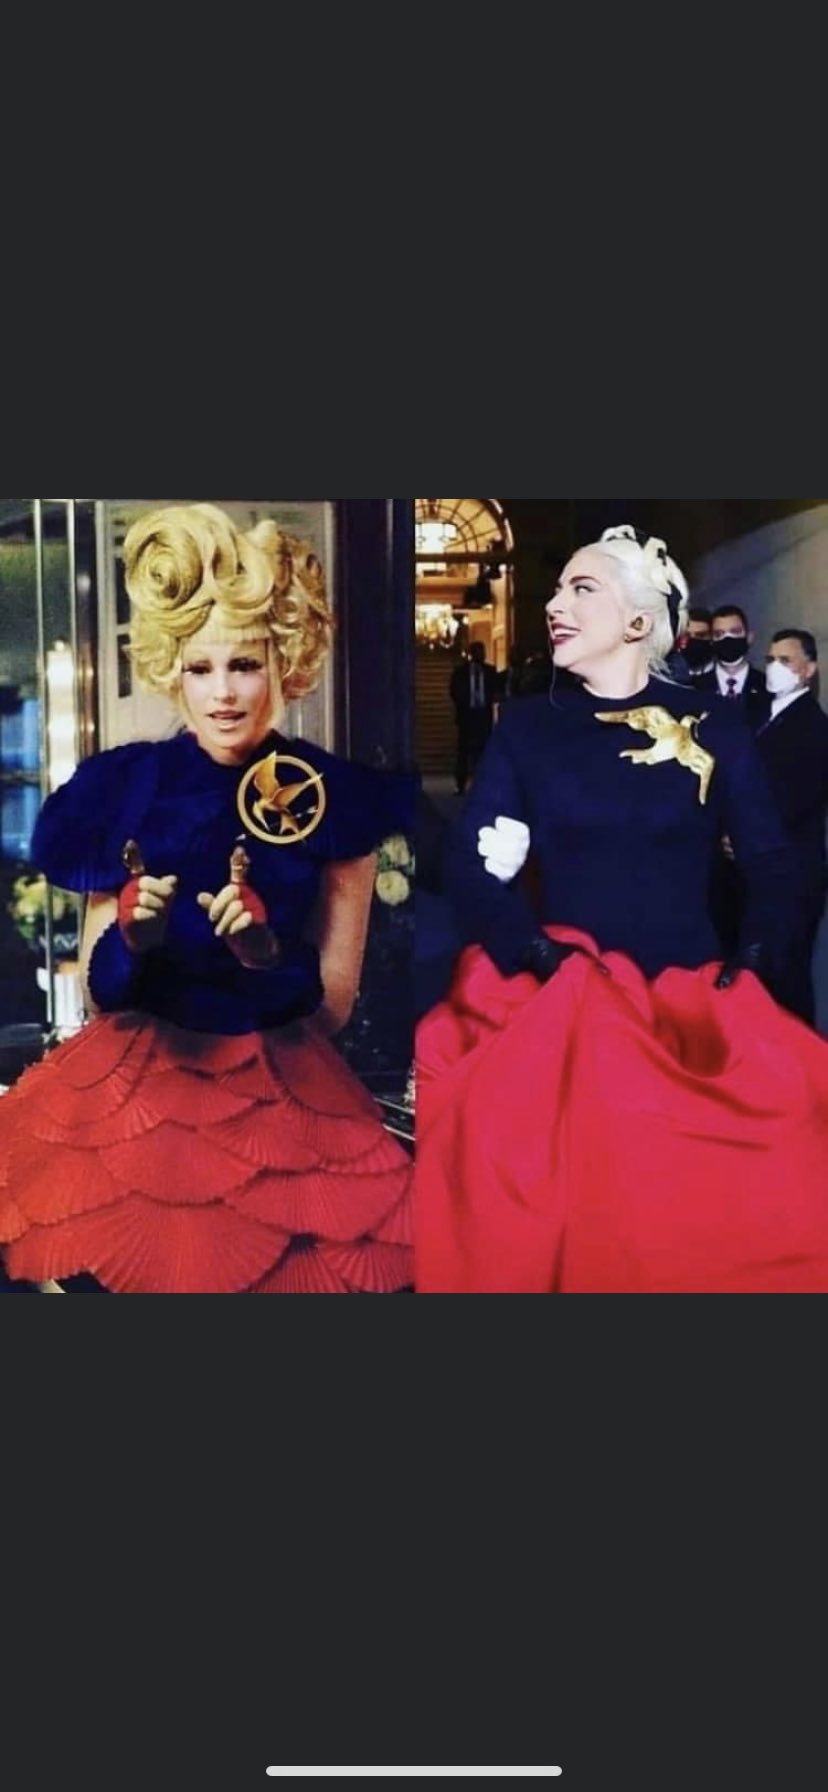 Lol I didn’t watch but did this really happen? Did Gaga legit dress in hunger games attire? Cuz if so